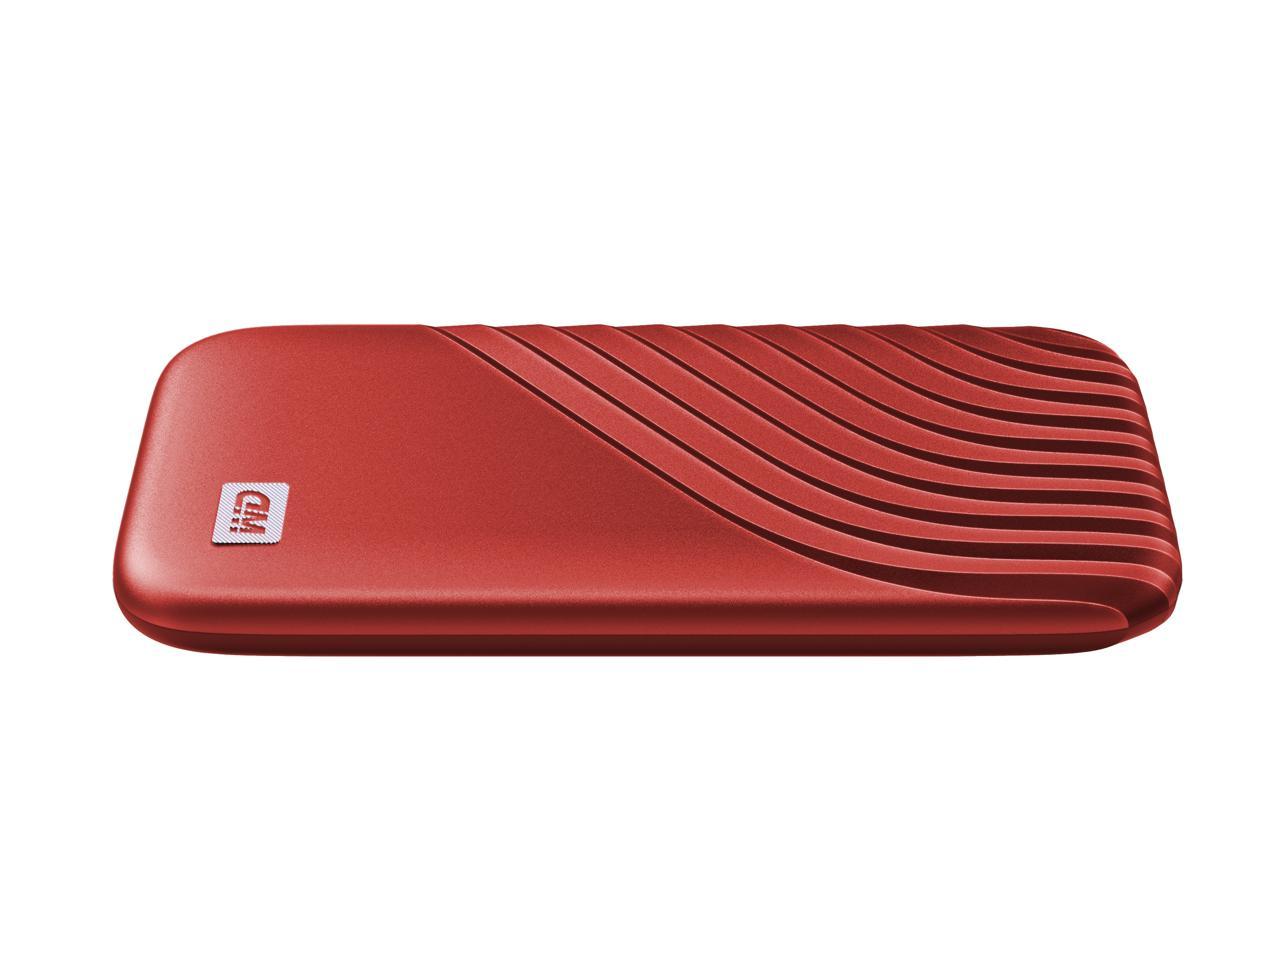 WD 1TB My Passport SSD External Portable Drive, Red  Newegg.com